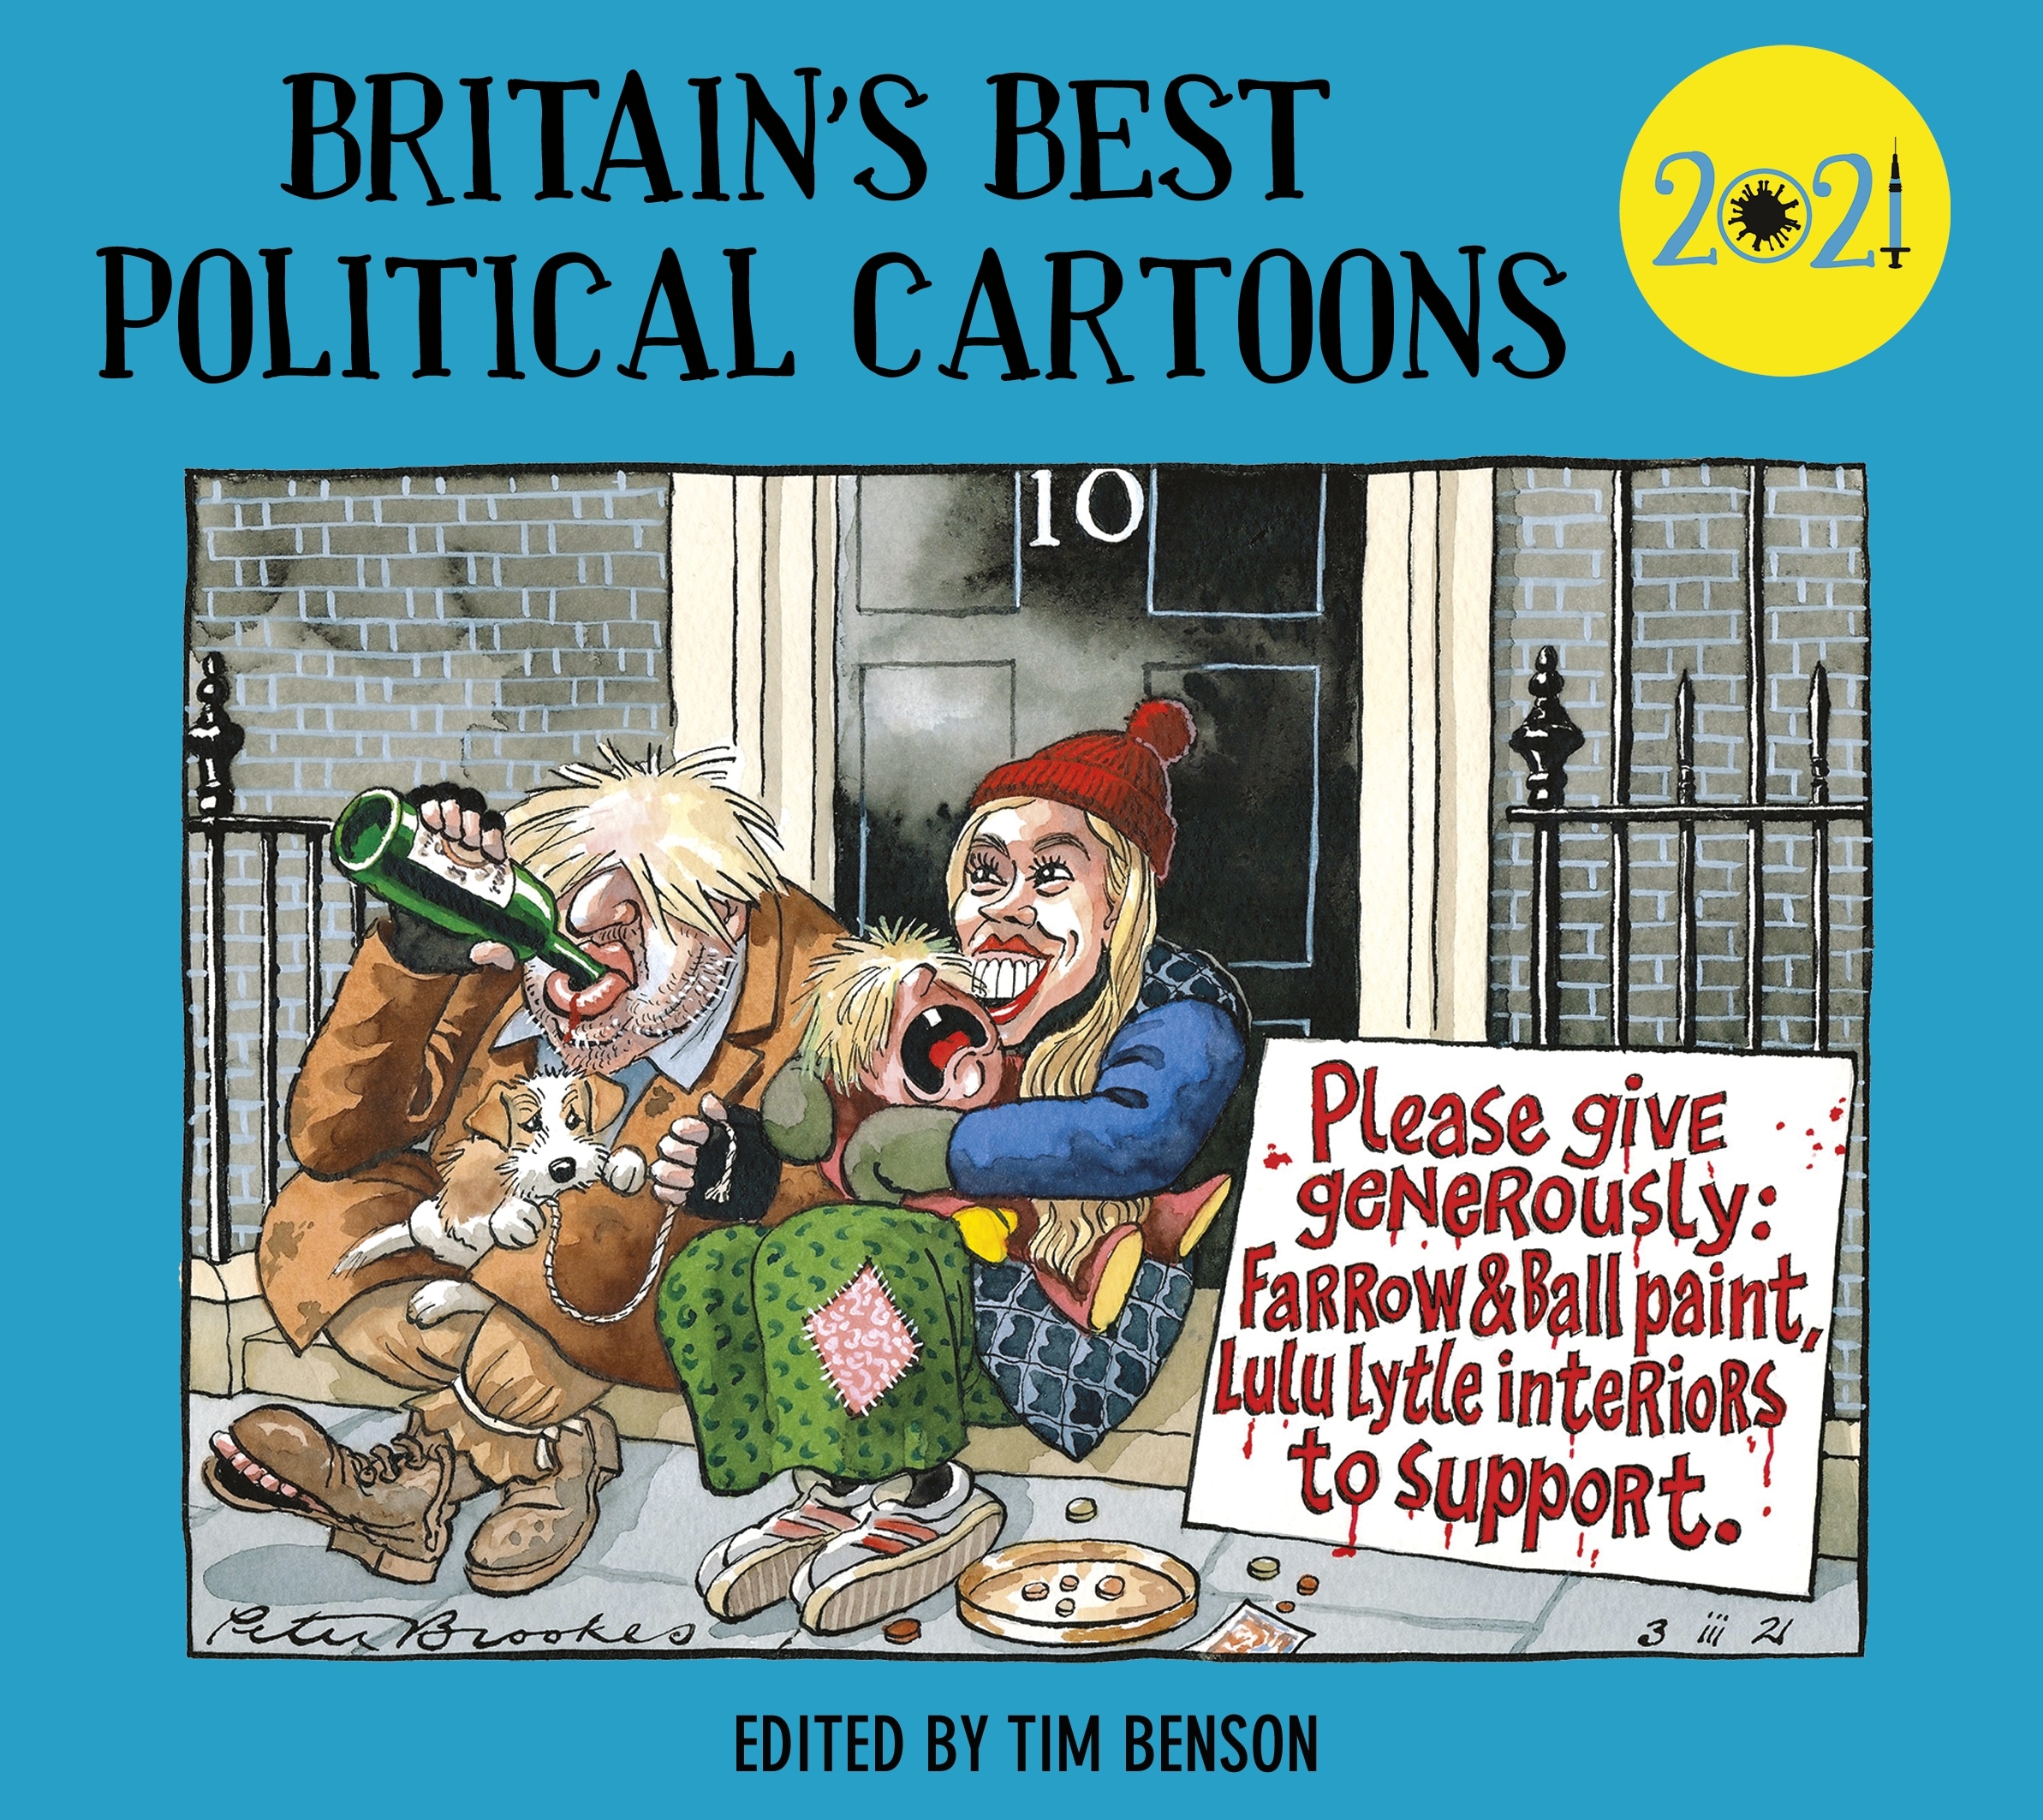 Book “Britain's Best Political Cartoons 2021” by Tim Benson — October 28, 2021